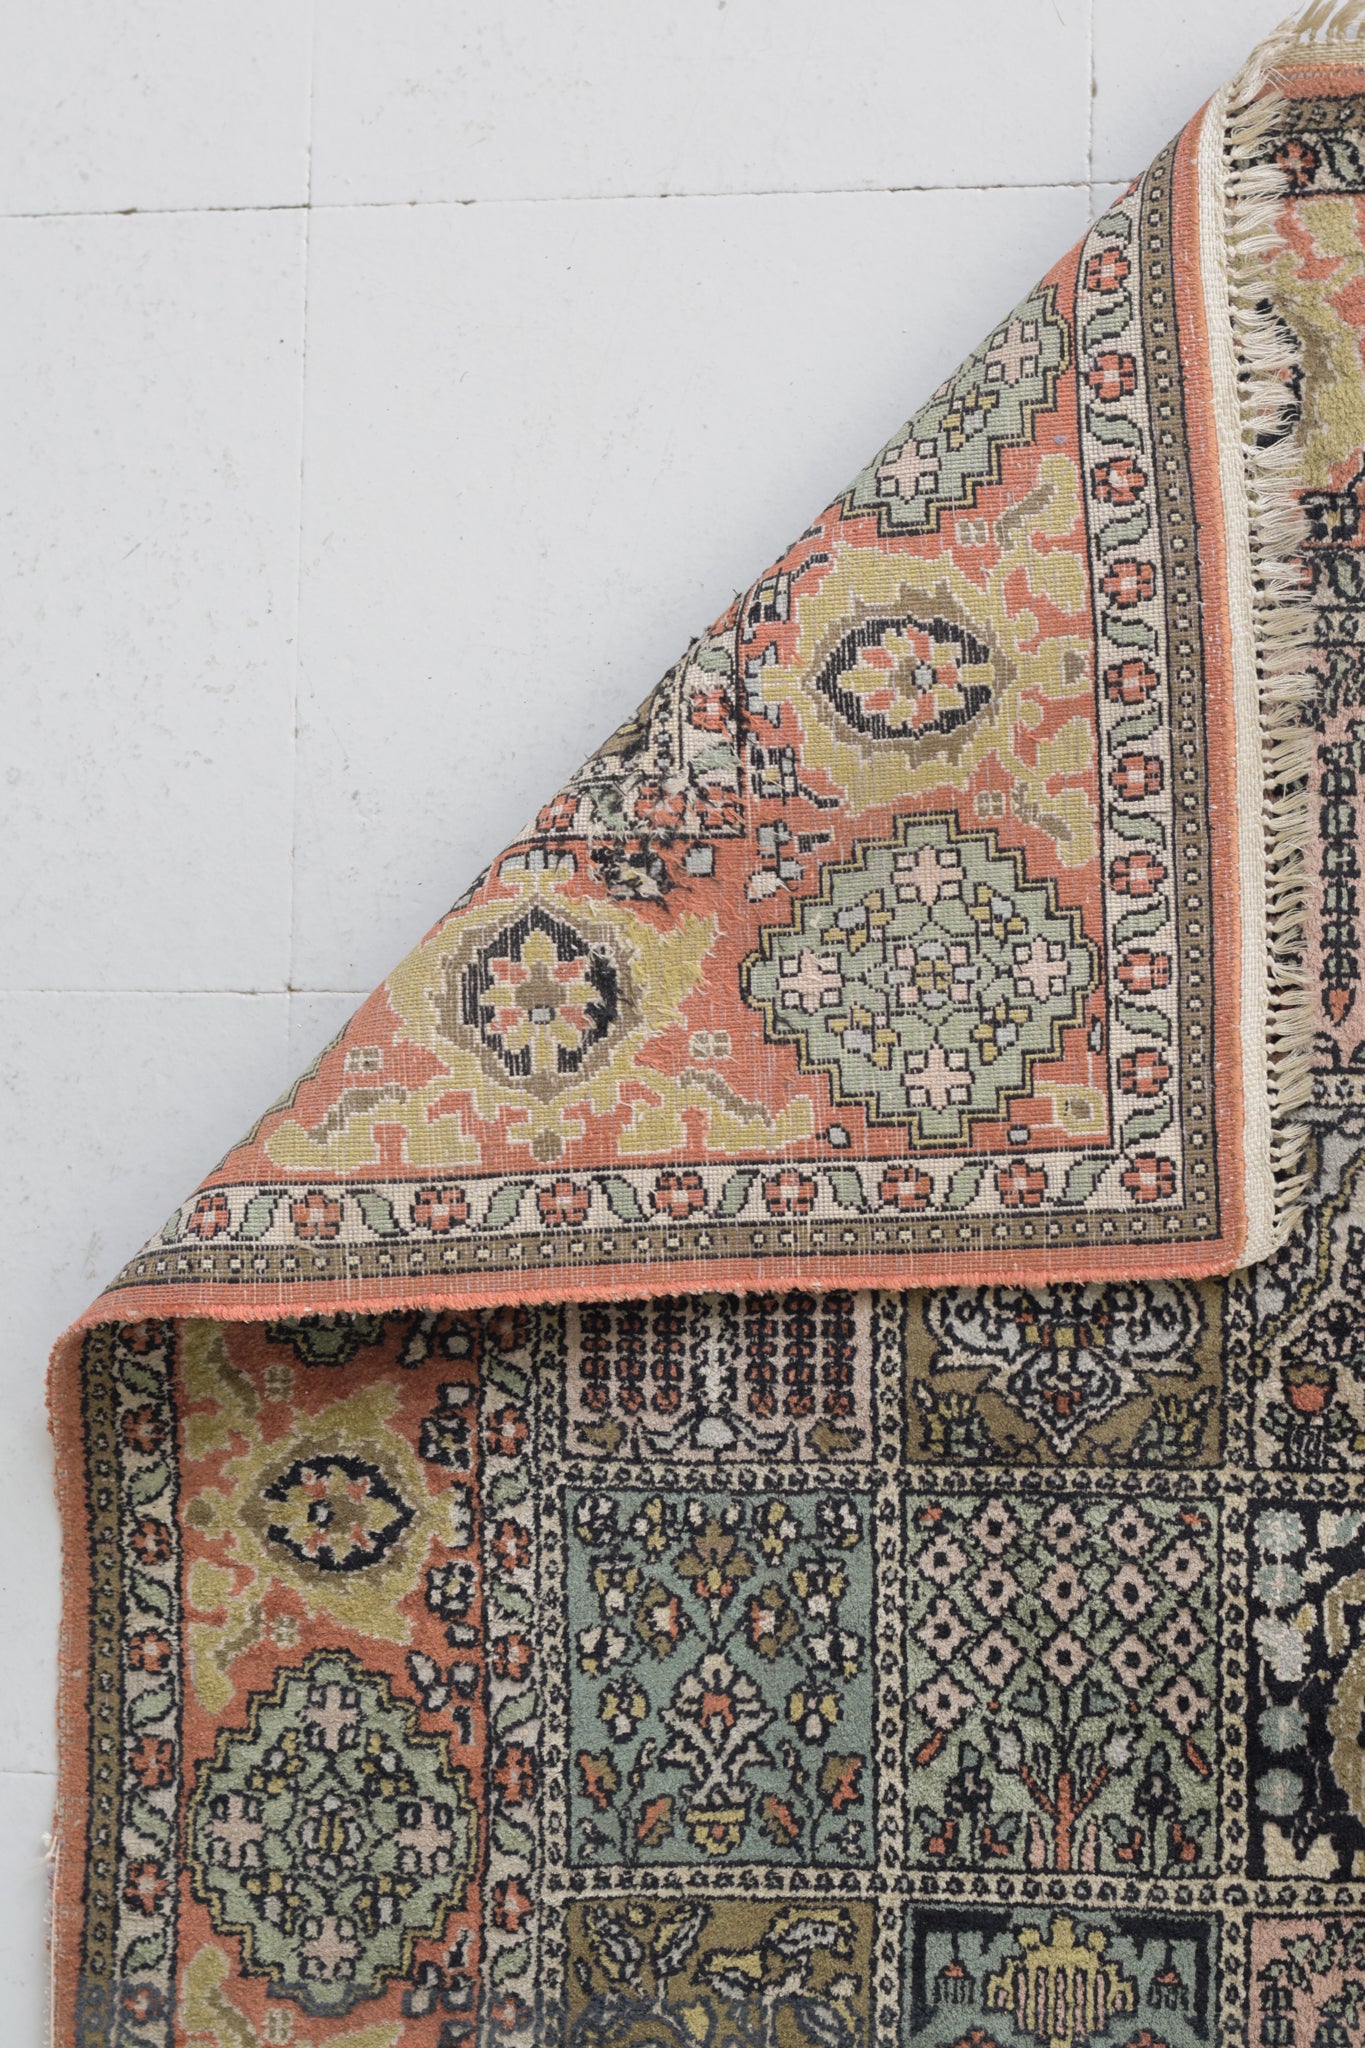 Handmade Medium-size Persian Rug